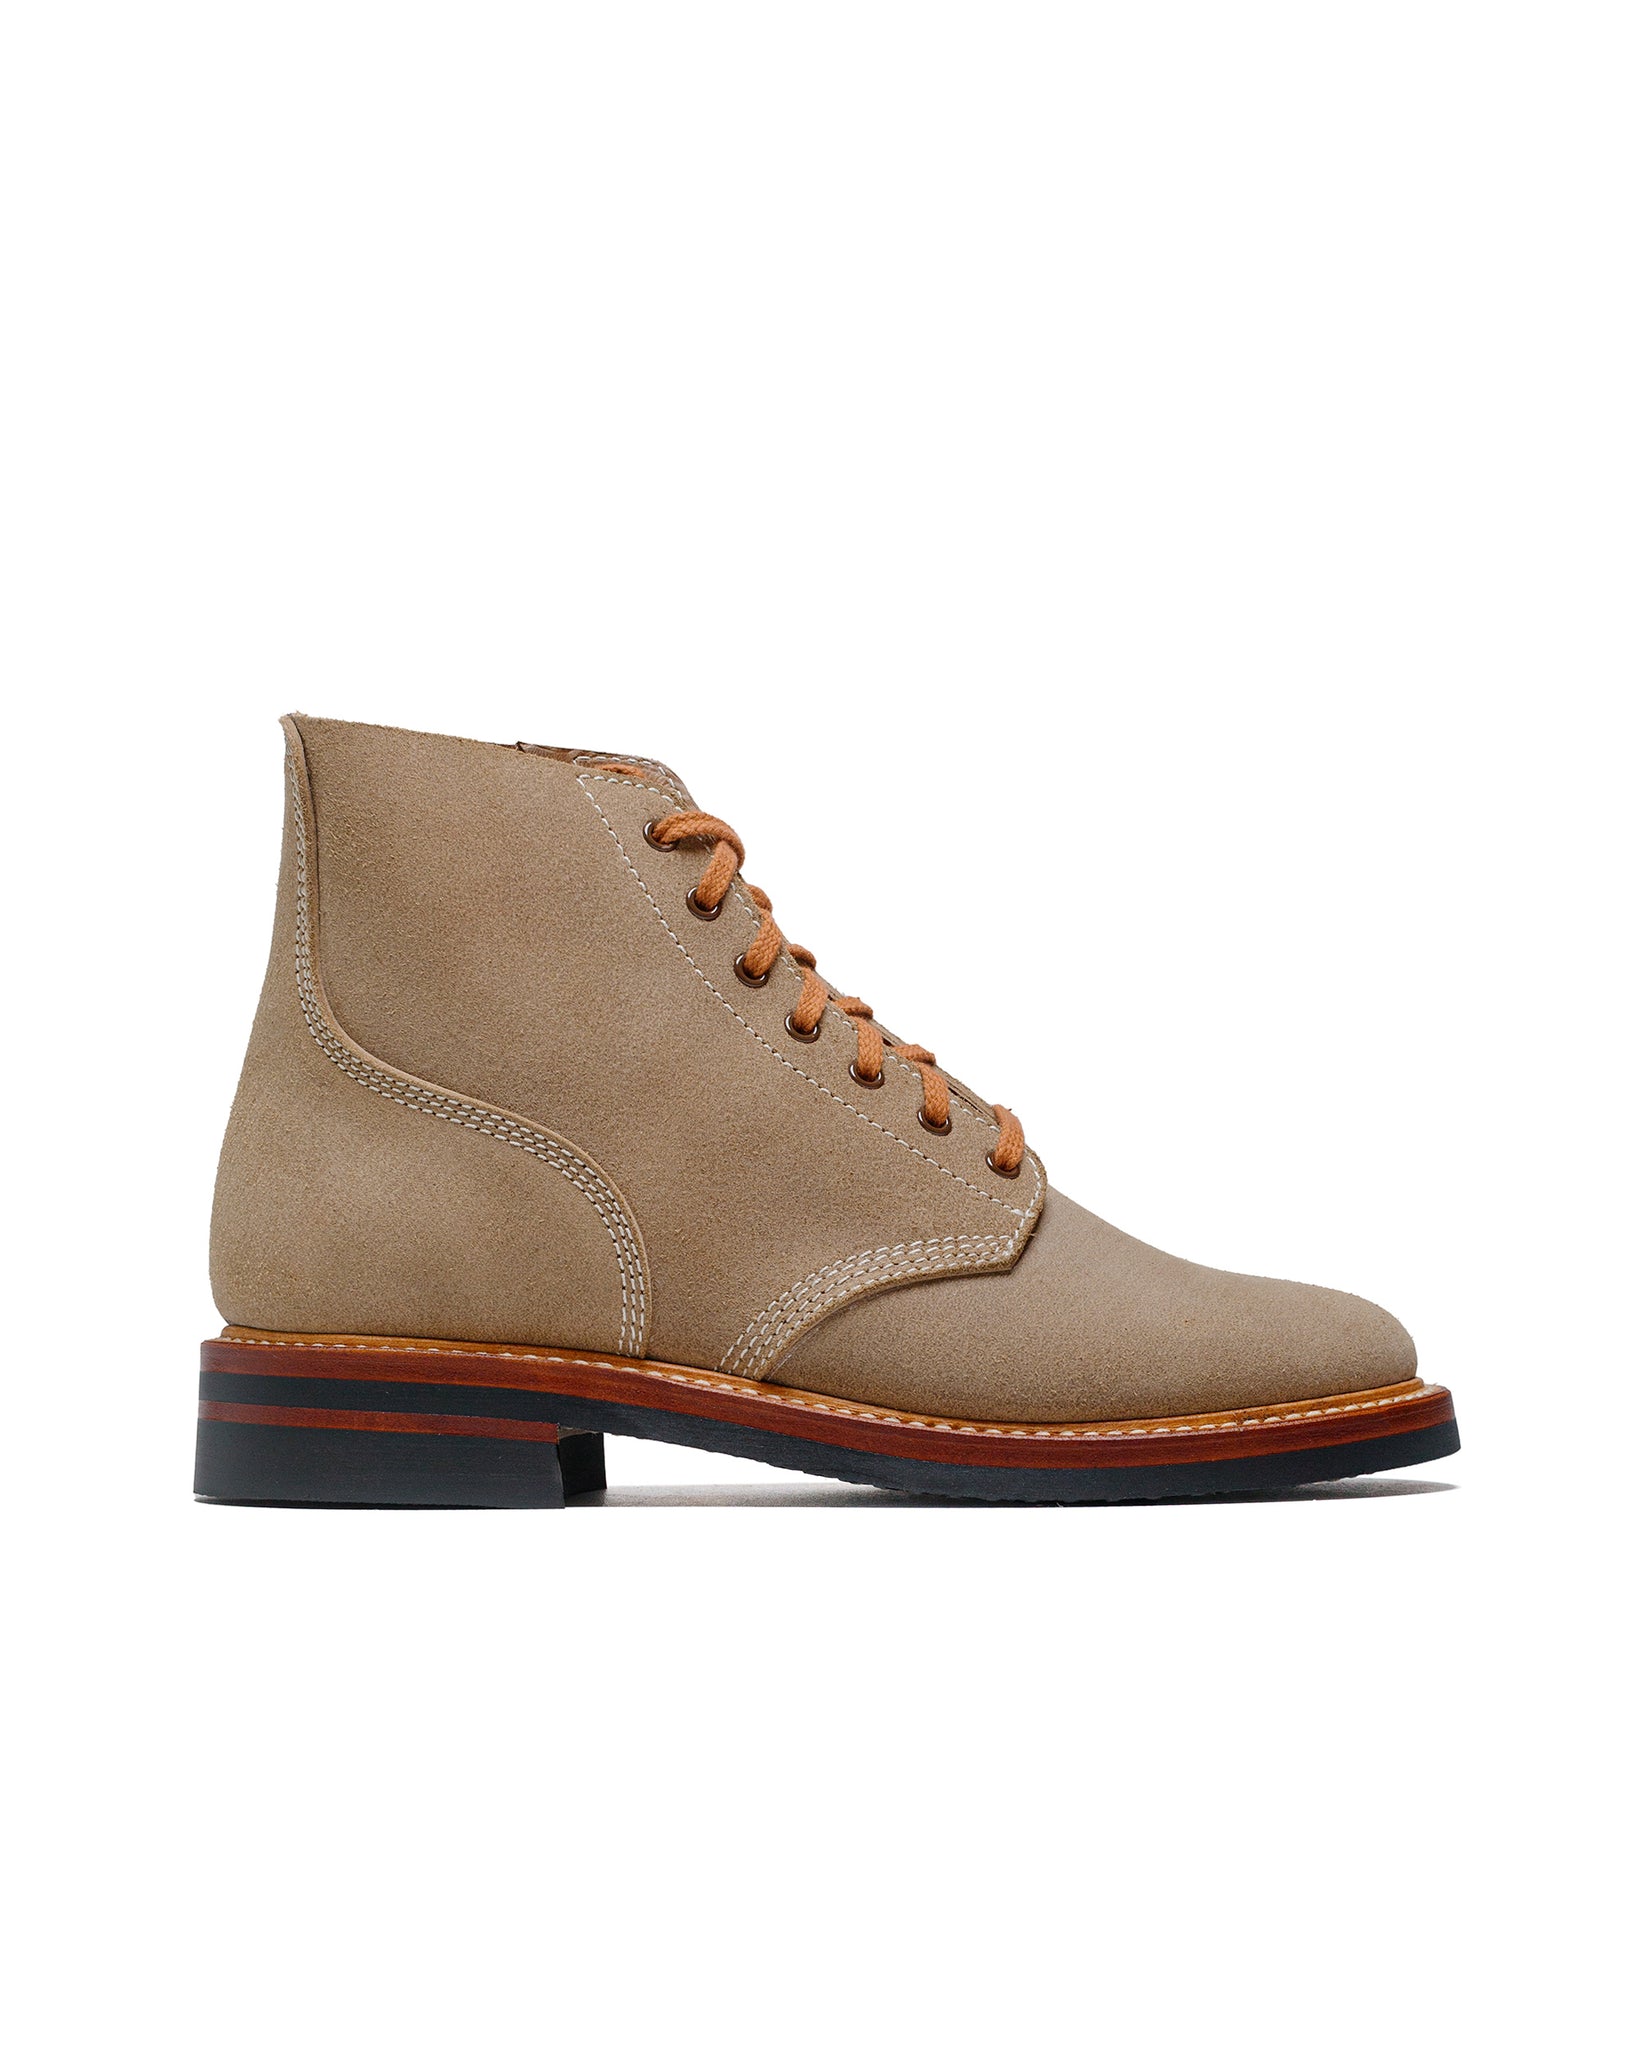 John Lofgren Bootmaker M-43 Service Shoes Horween Leather CXL Natural Roughout